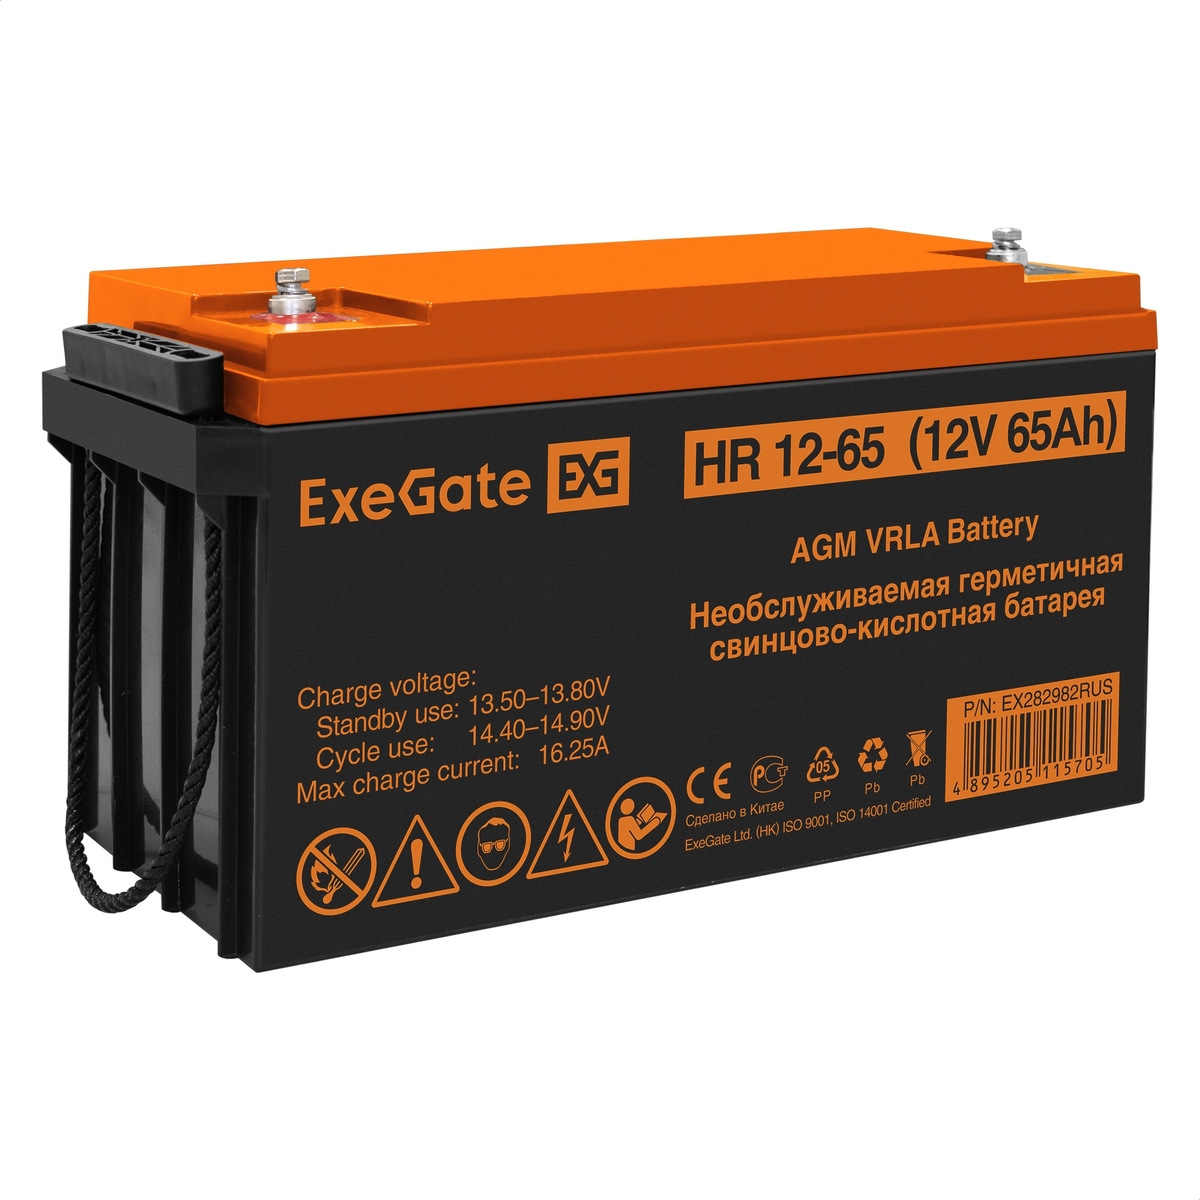 UPS set EX295998 + battery 65Ah EX282982 2 piece